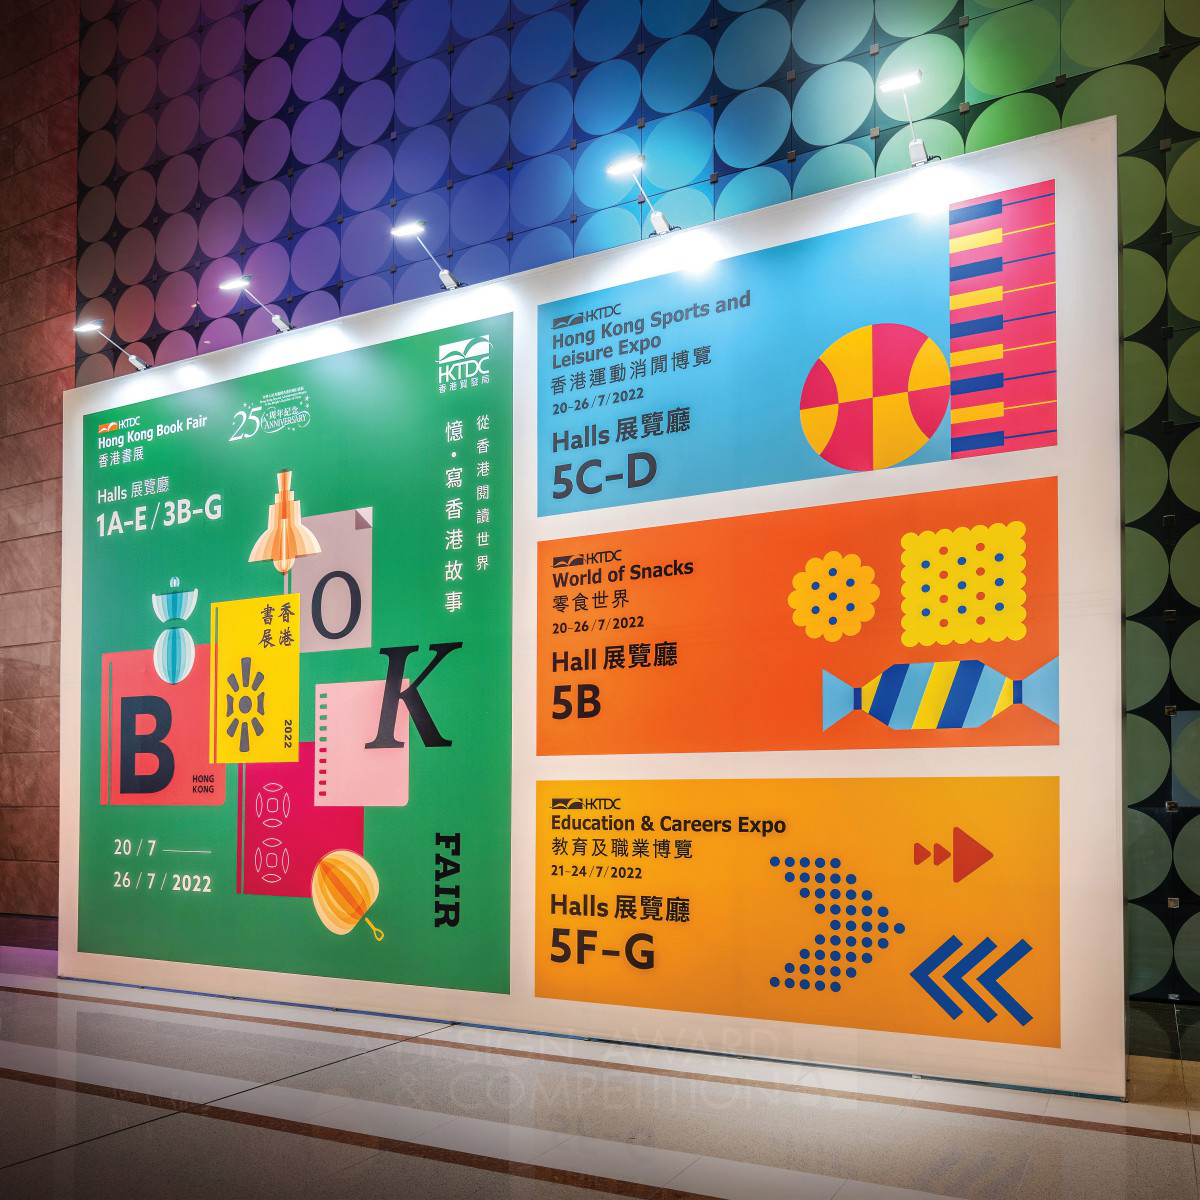 Hong Kong Book Fair 2022 Public Exhibition by Hong Kong Trade Development Council